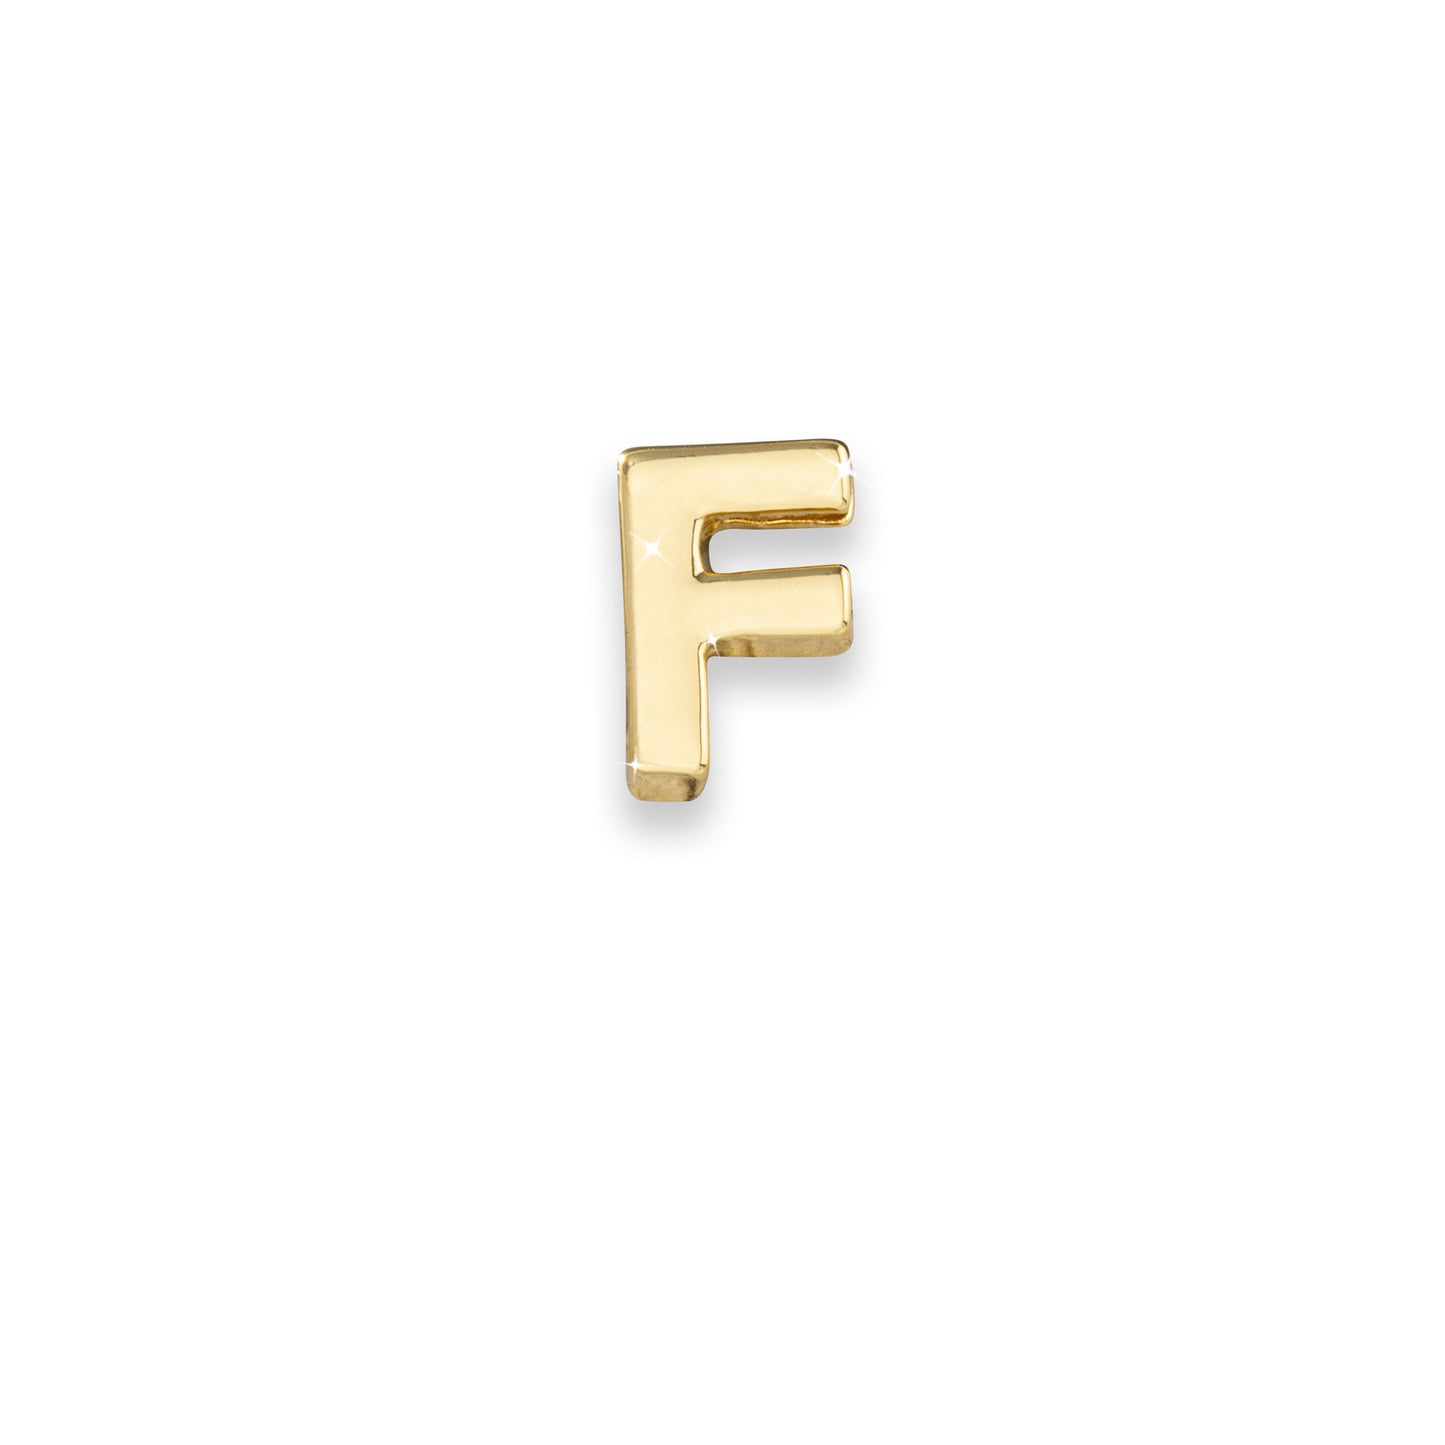 Gold letter F monogram charm for necklaces & bracelets